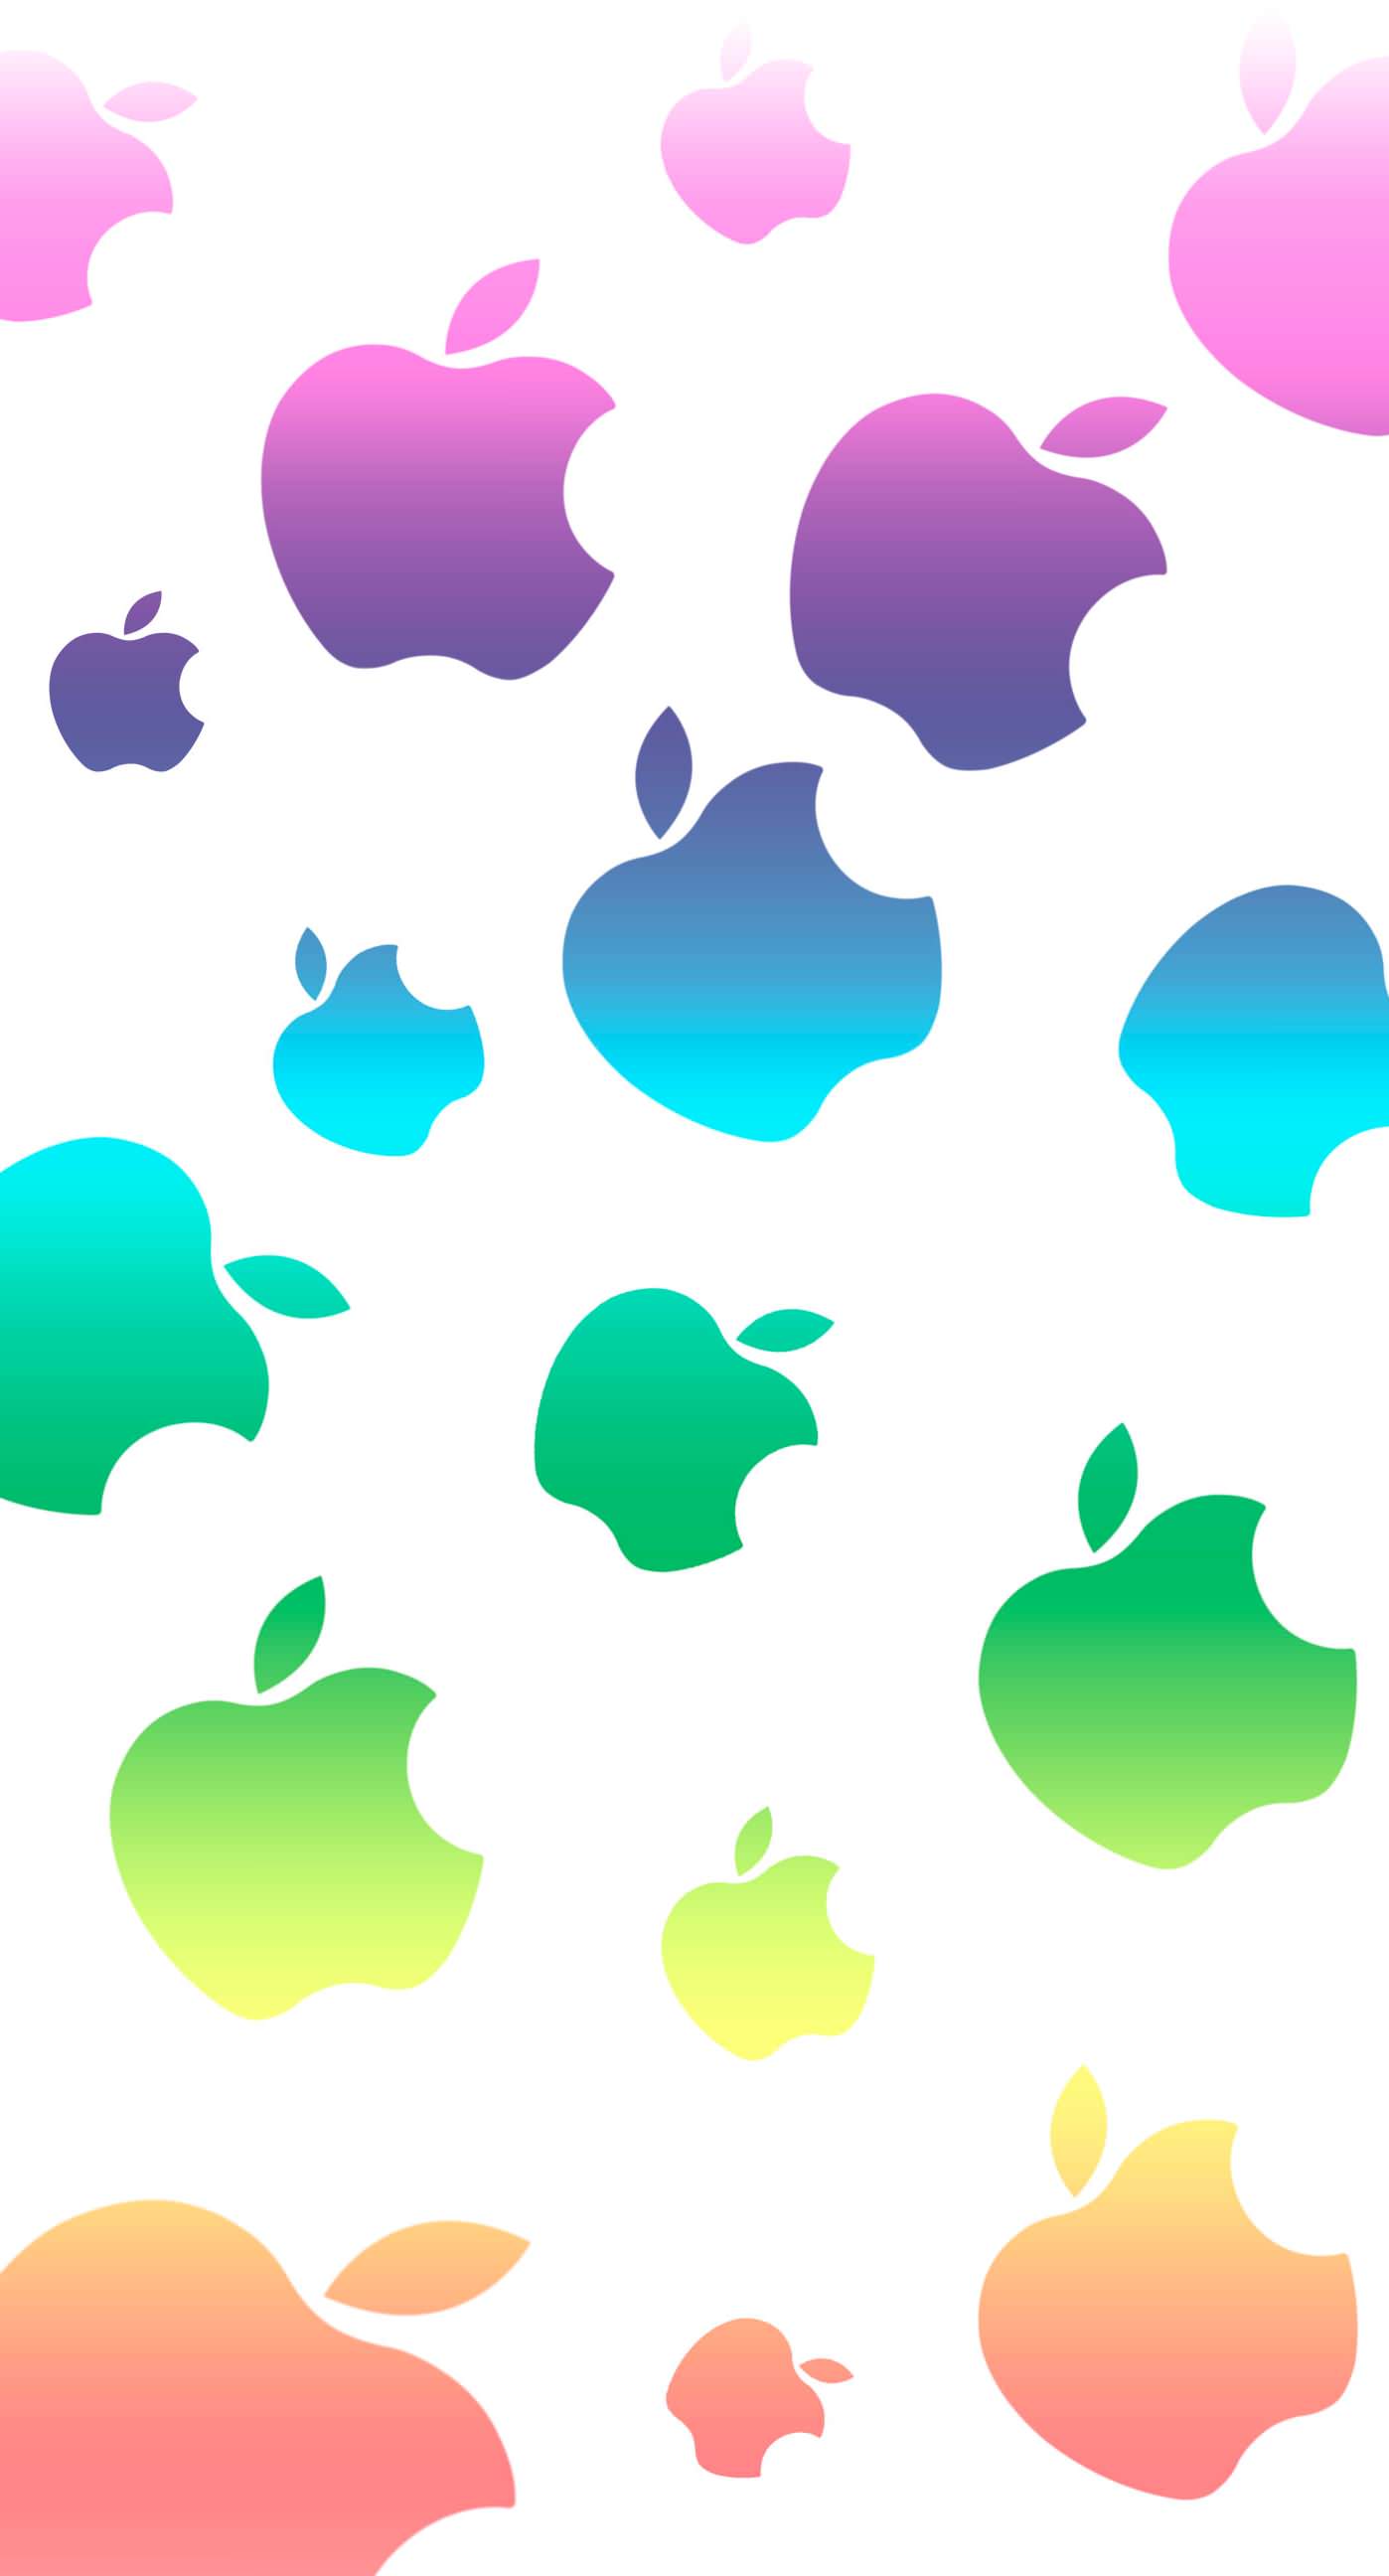 Cute colorful Apple | wallpaper.sc iPhone6sPlus